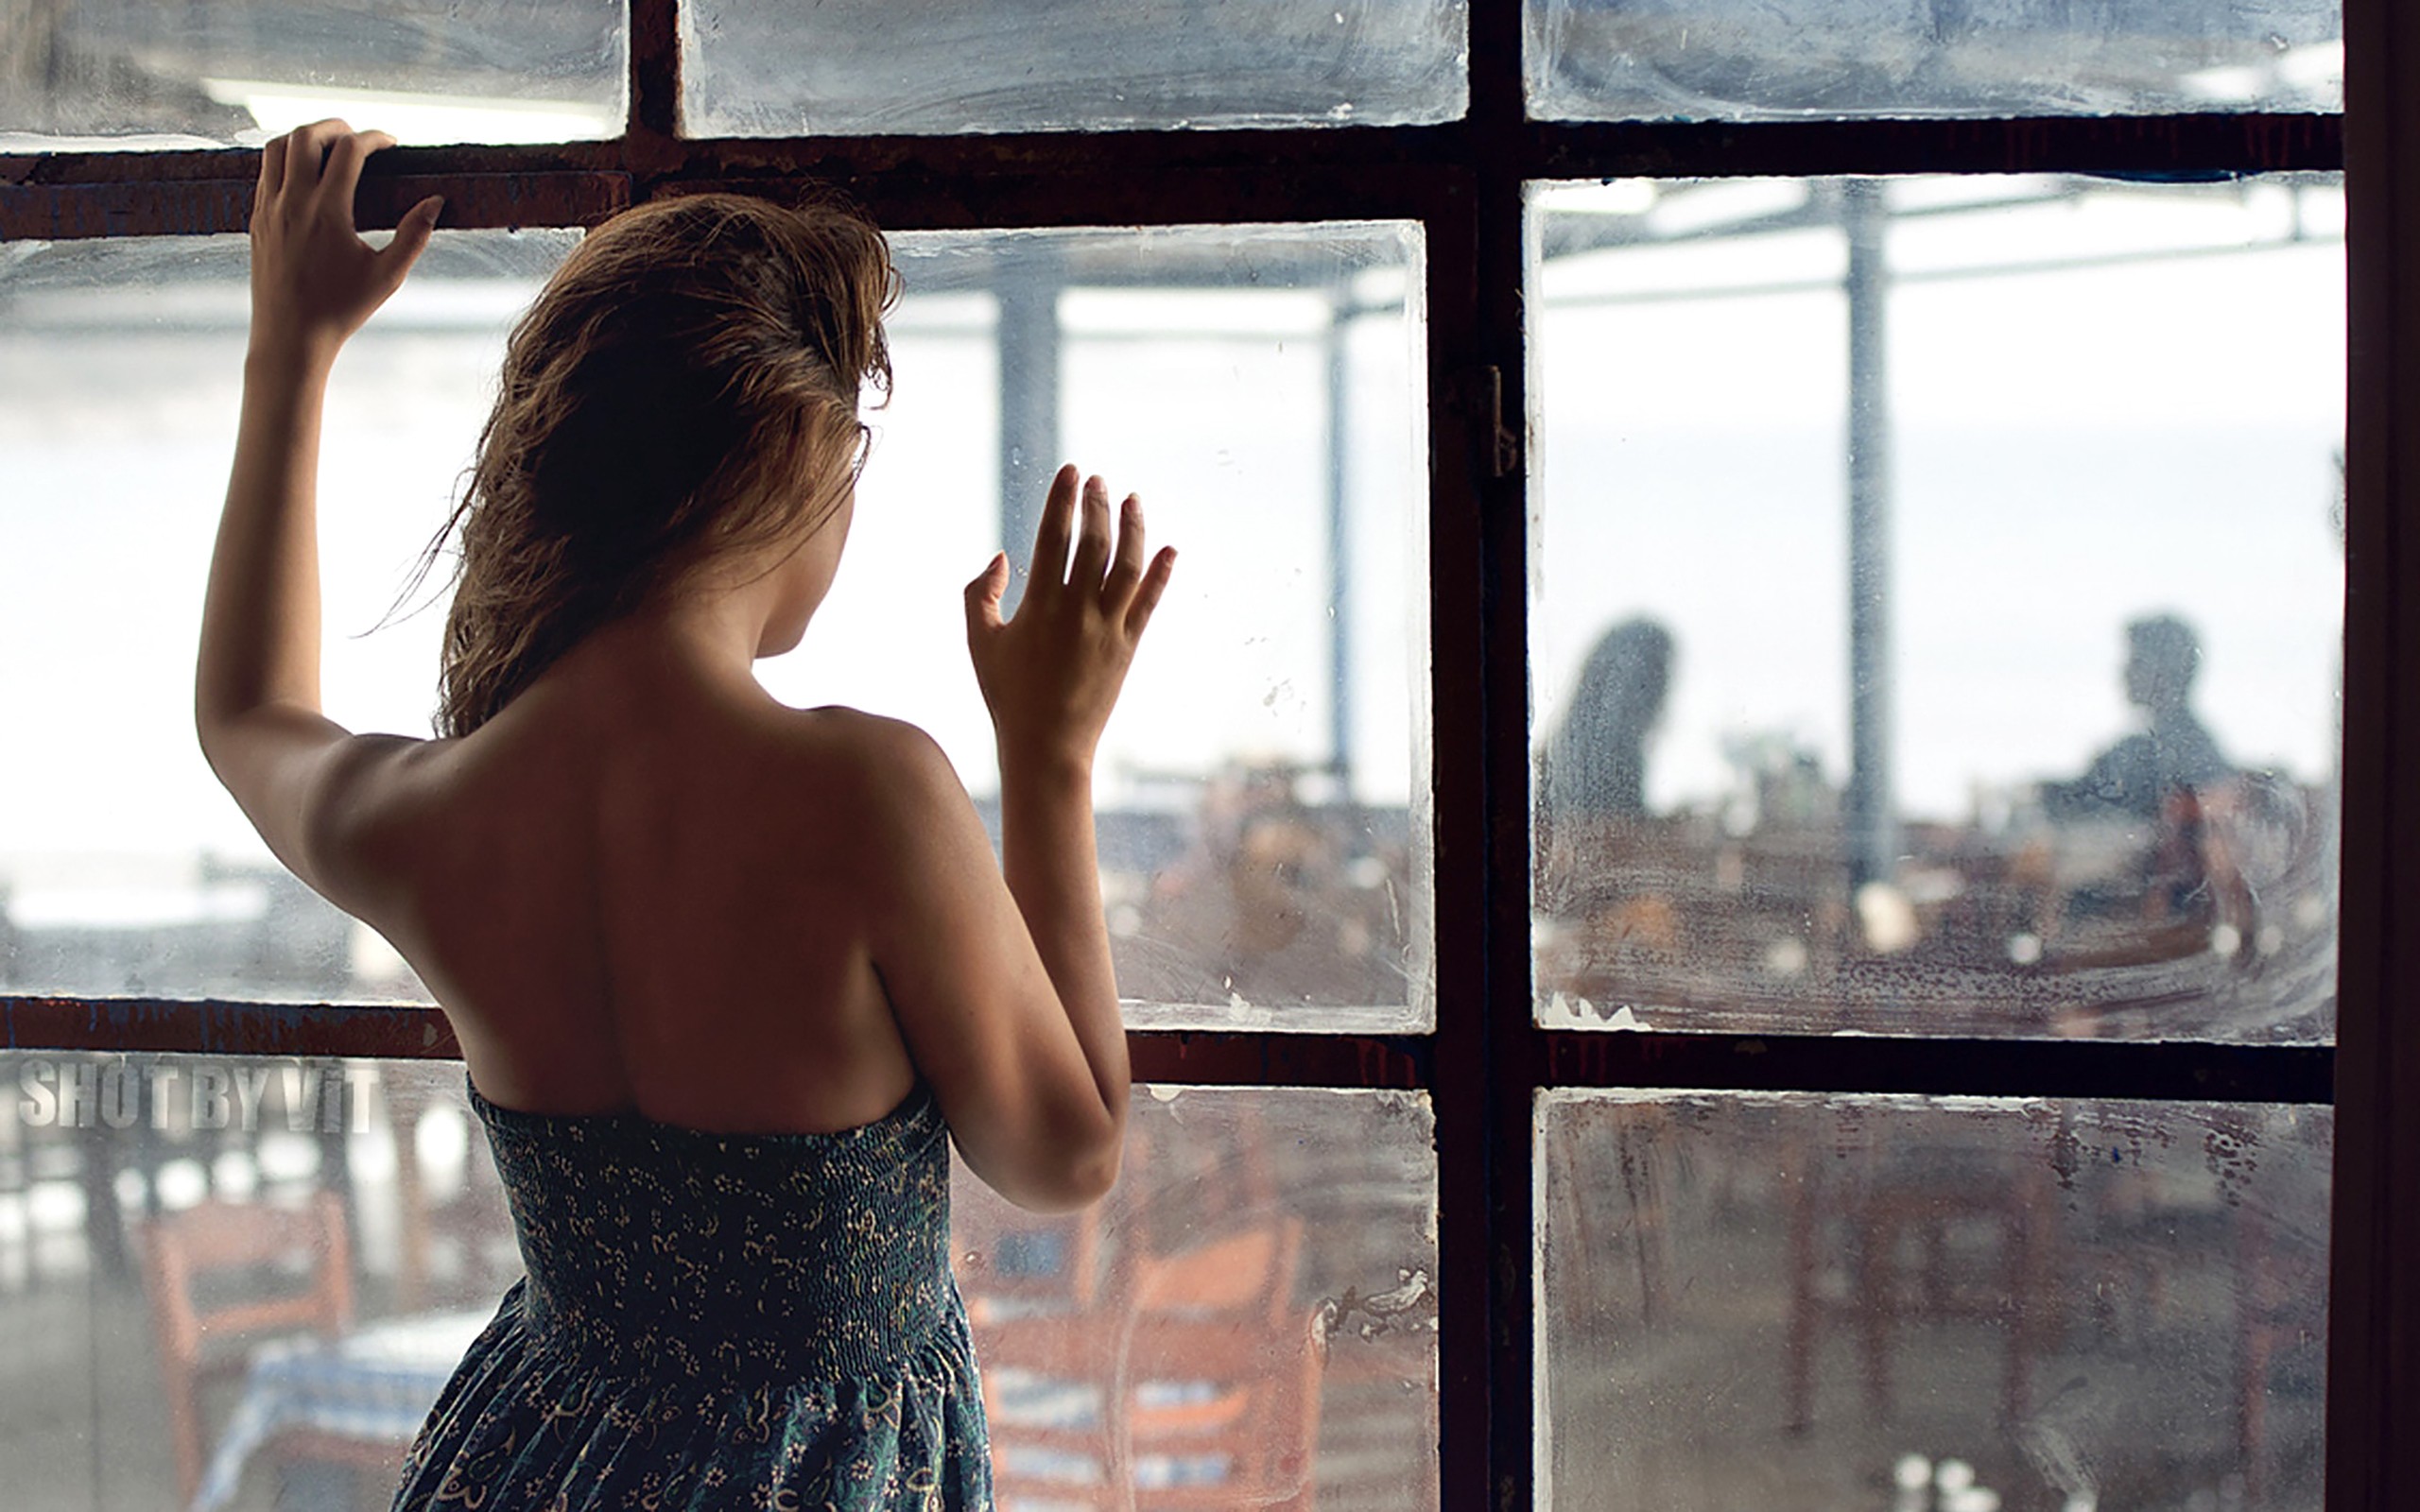 Она души не приняла. Фотосессия у окна. Девушка у окна. Одинокая девушка у окна. Фотосессия возле окна.